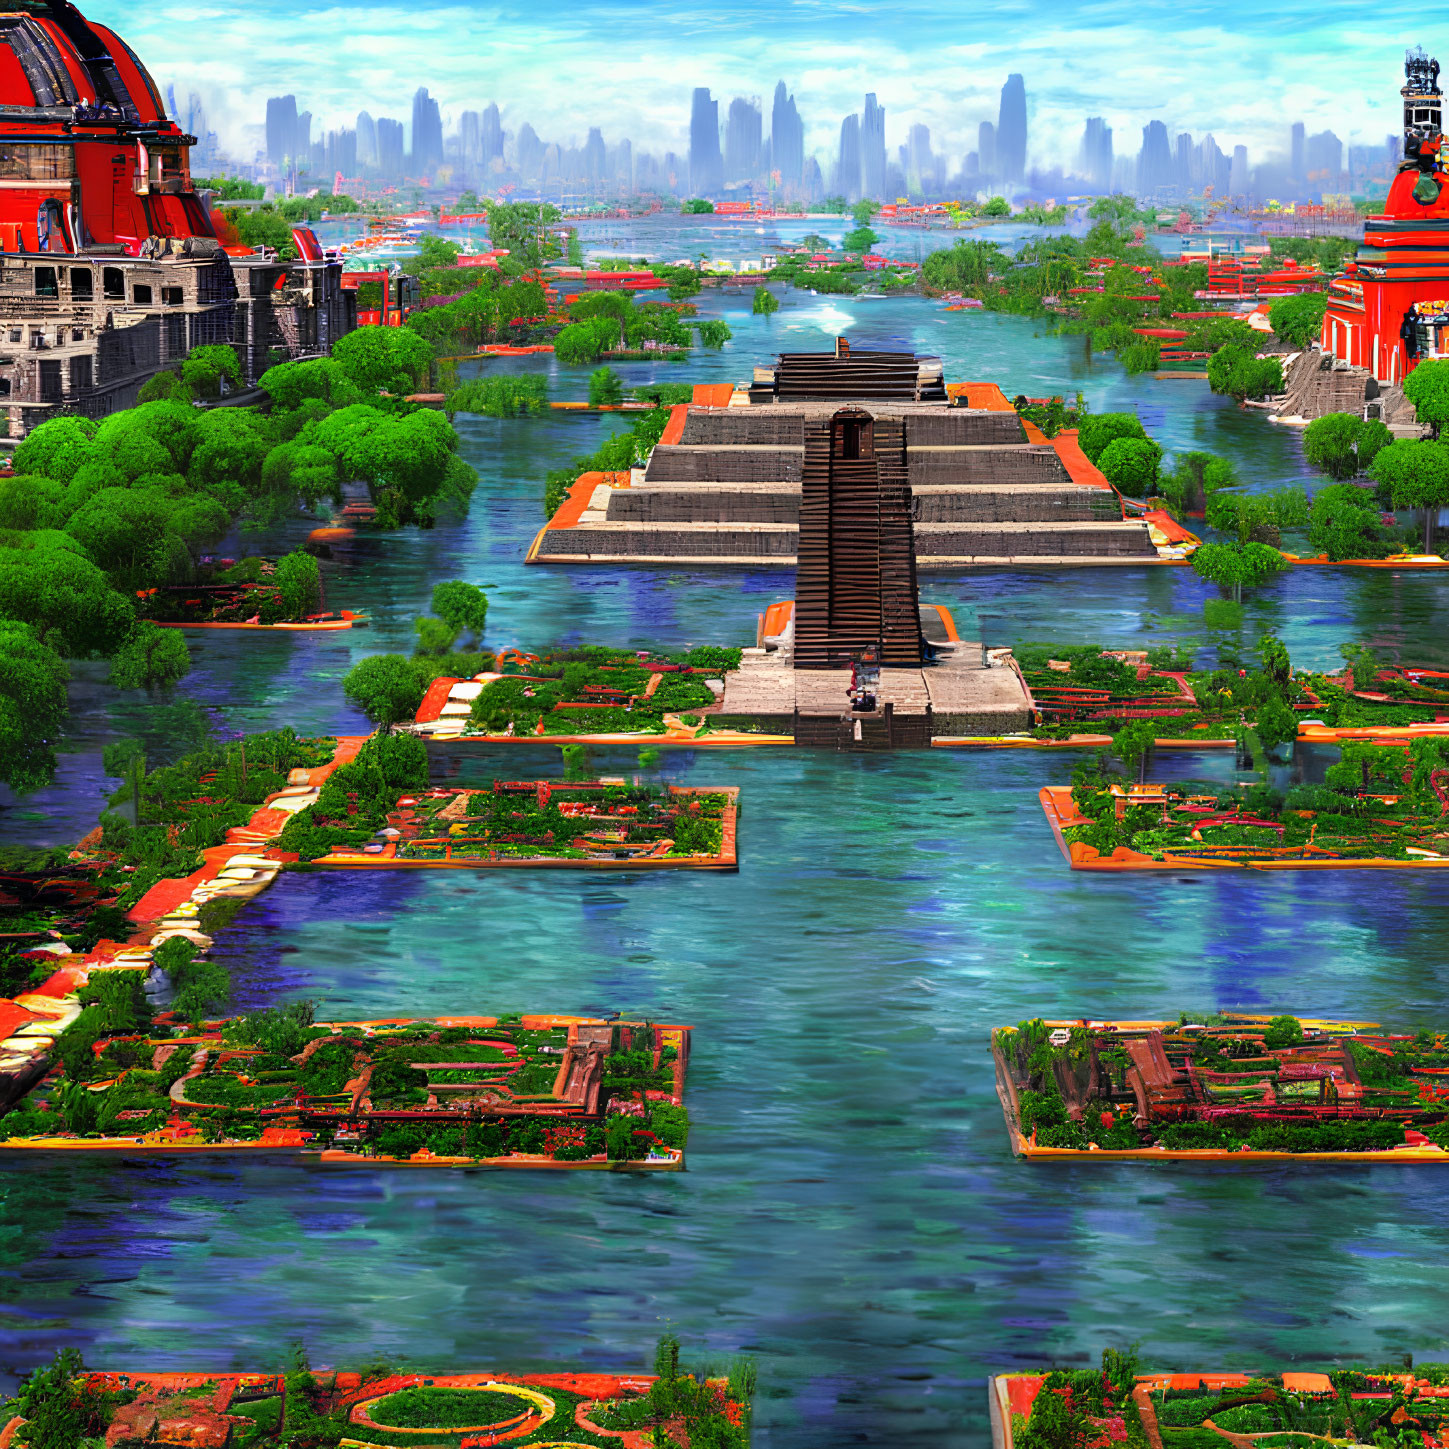 Futuristic cityscape with Aztec pyramid and lush greenery